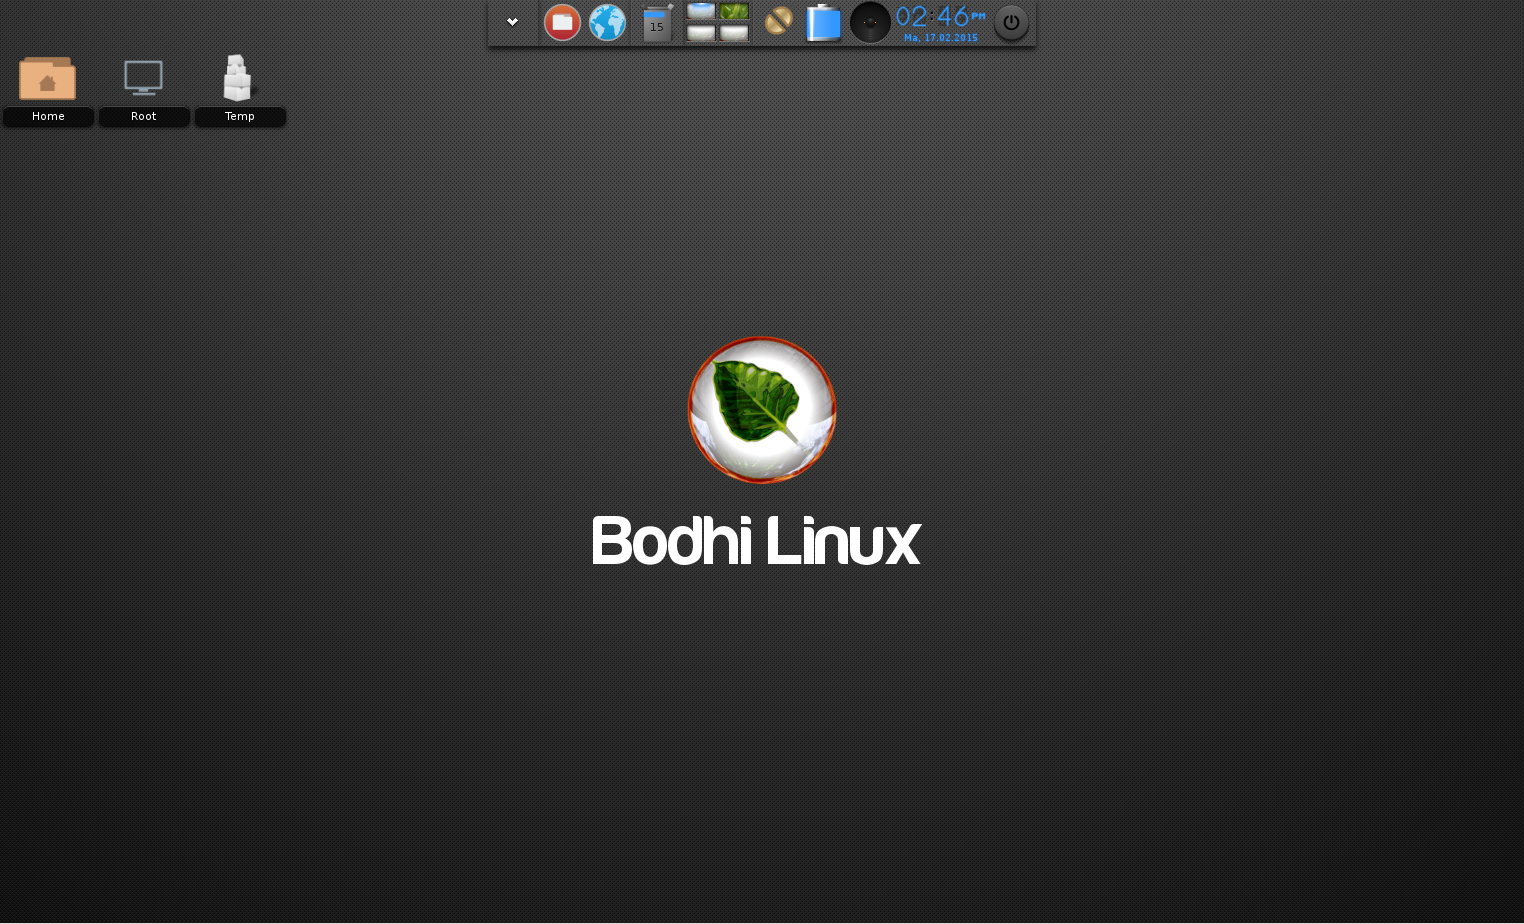 linux kernel 3.0 ubuntu download